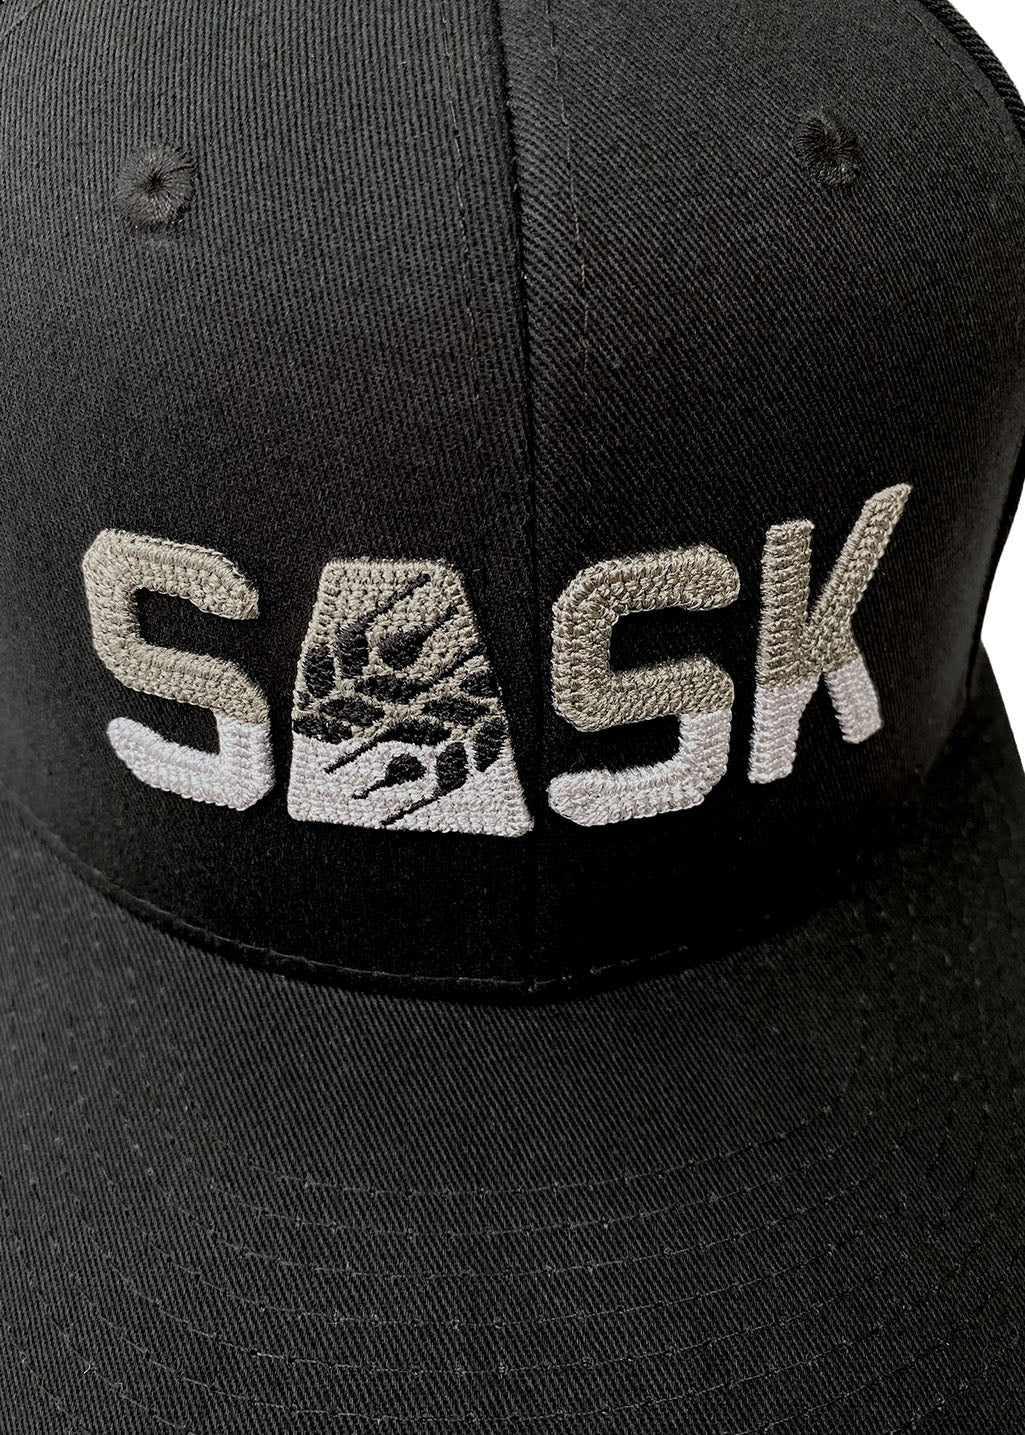 Sask Icon Snapback | Black/Greyscale - Hardpressed Print Studio Inc.